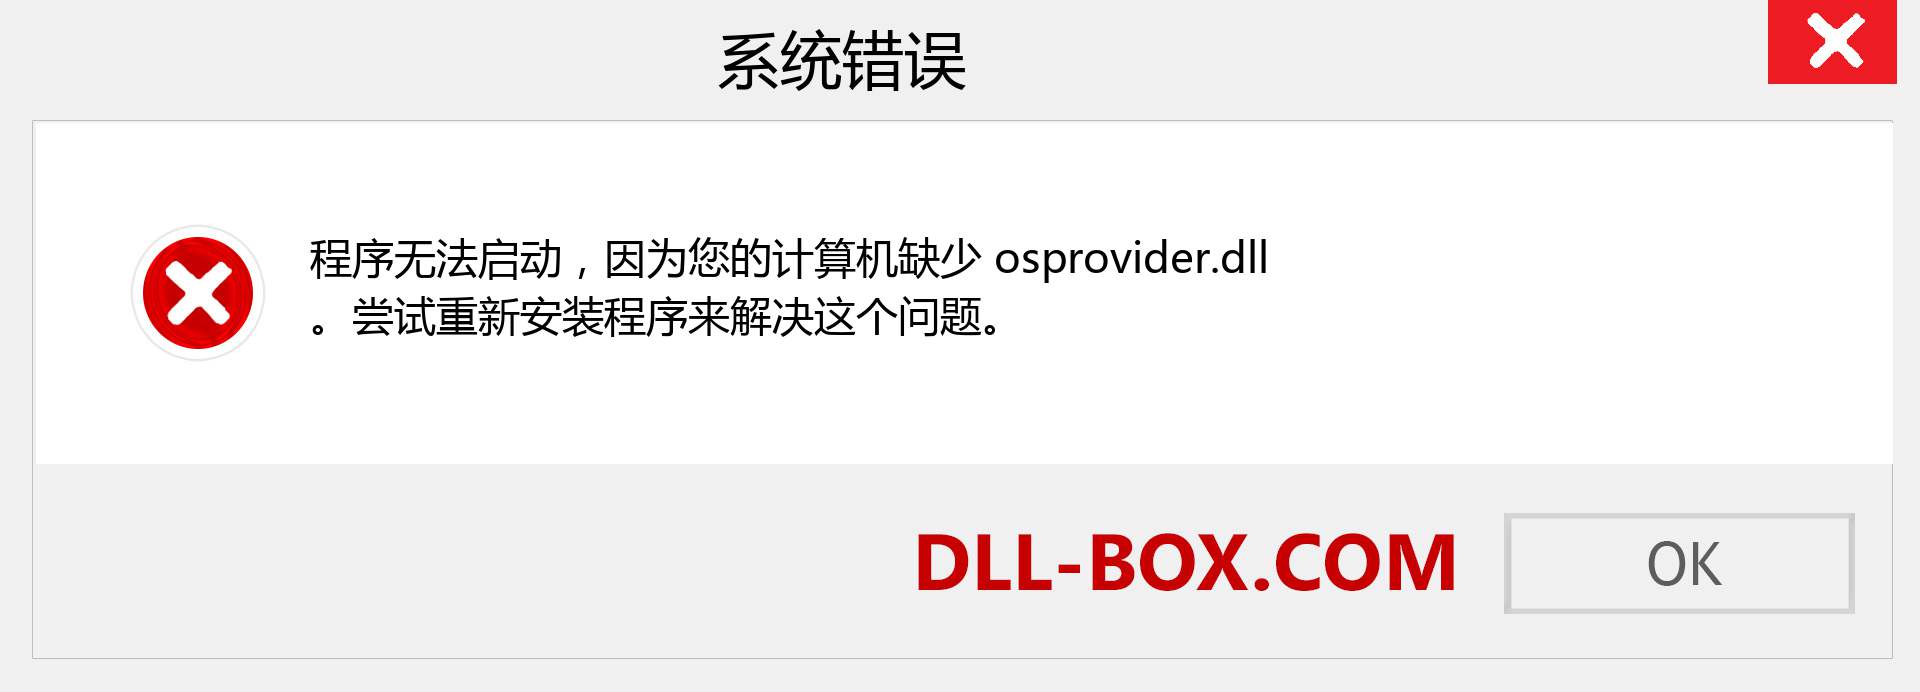 osprovider.dll 文件丢失？。 适用于 Windows 7、8、10 的下载 - 修复 Windows、照片、图像上的 osprovider dll 丢失错误